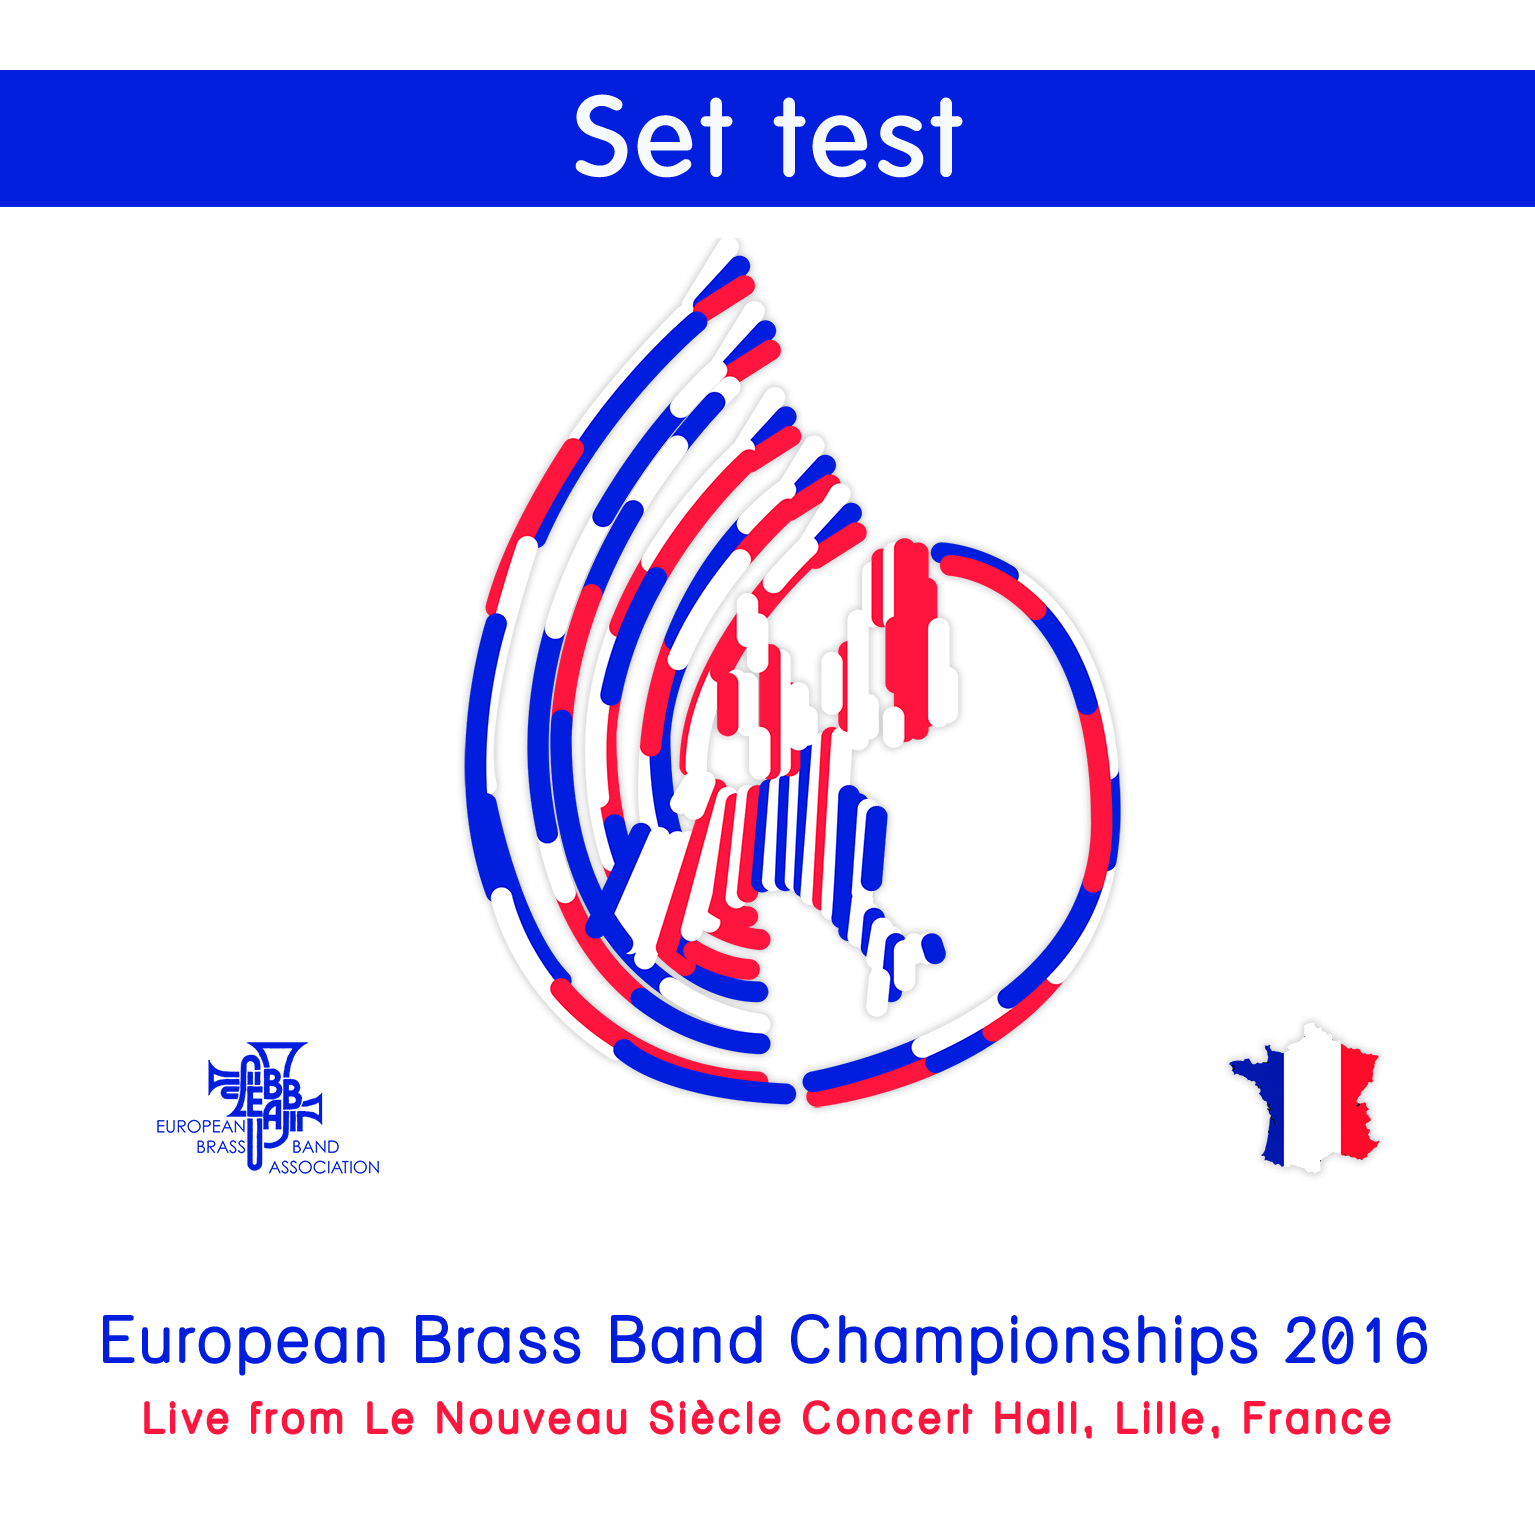 European Brass Band Championships 2016 - Set test - Download